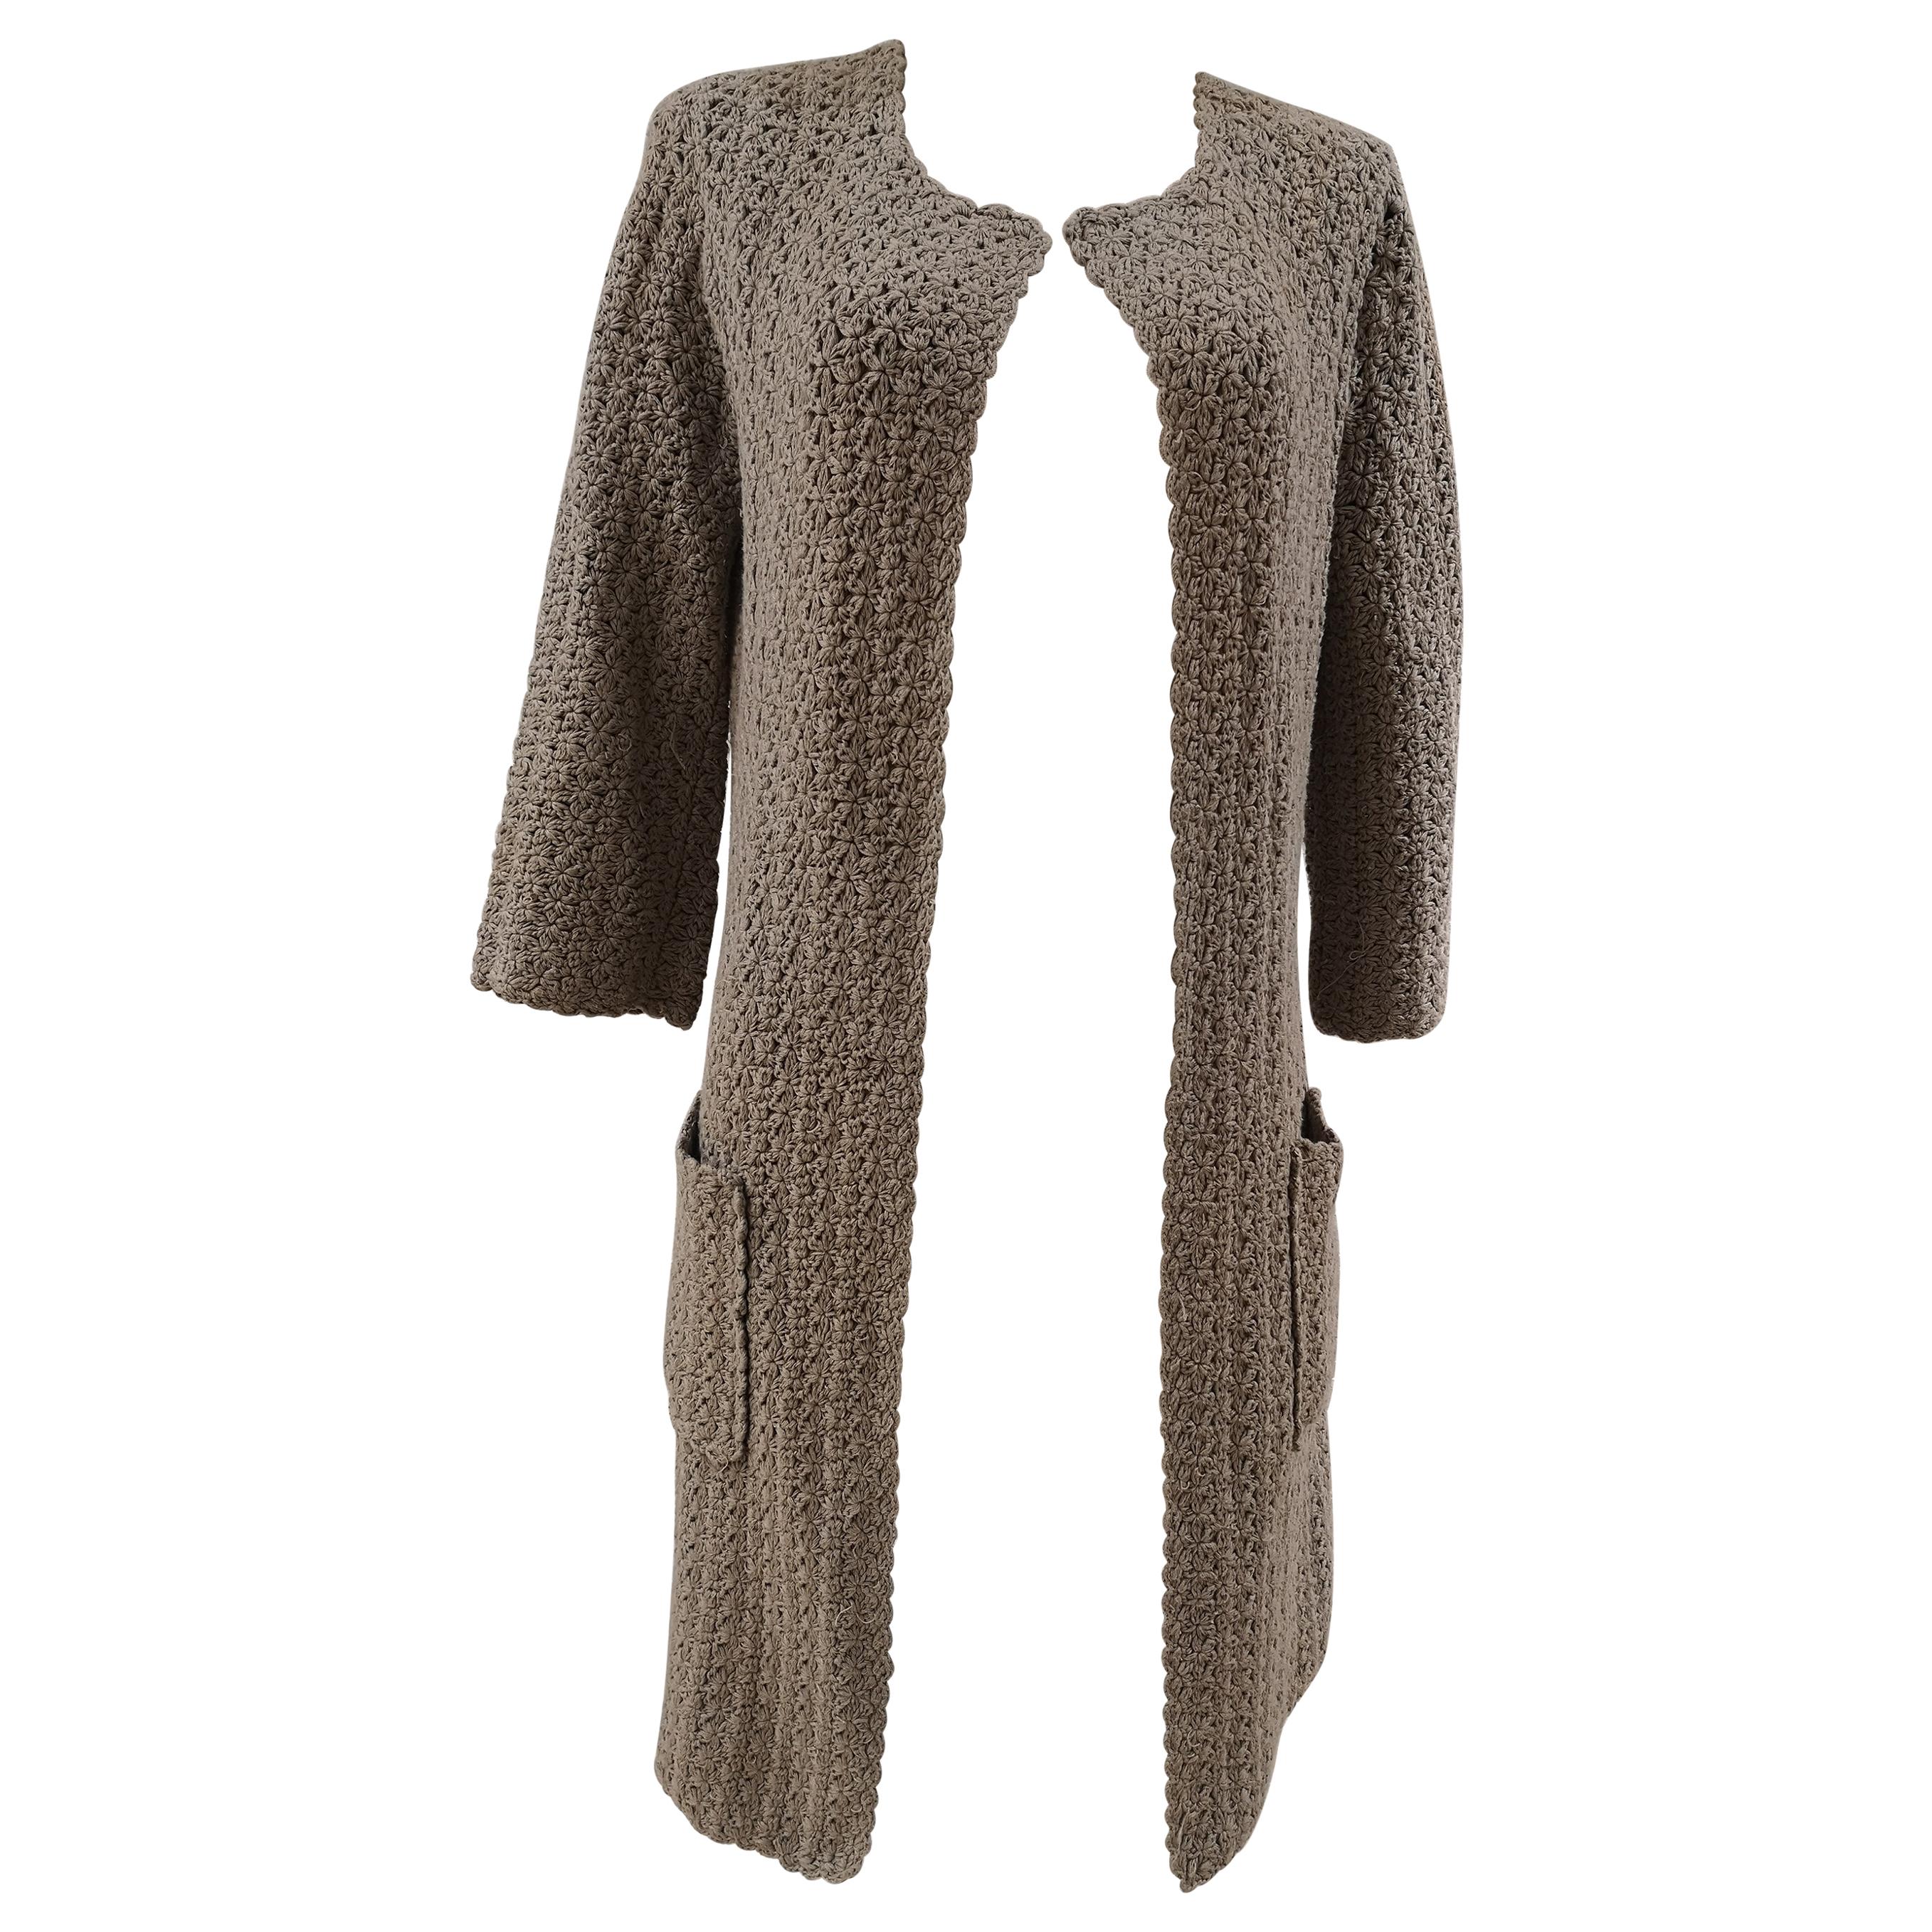 P.A.R.O.S.H beige knit cotton long coat / sweater 